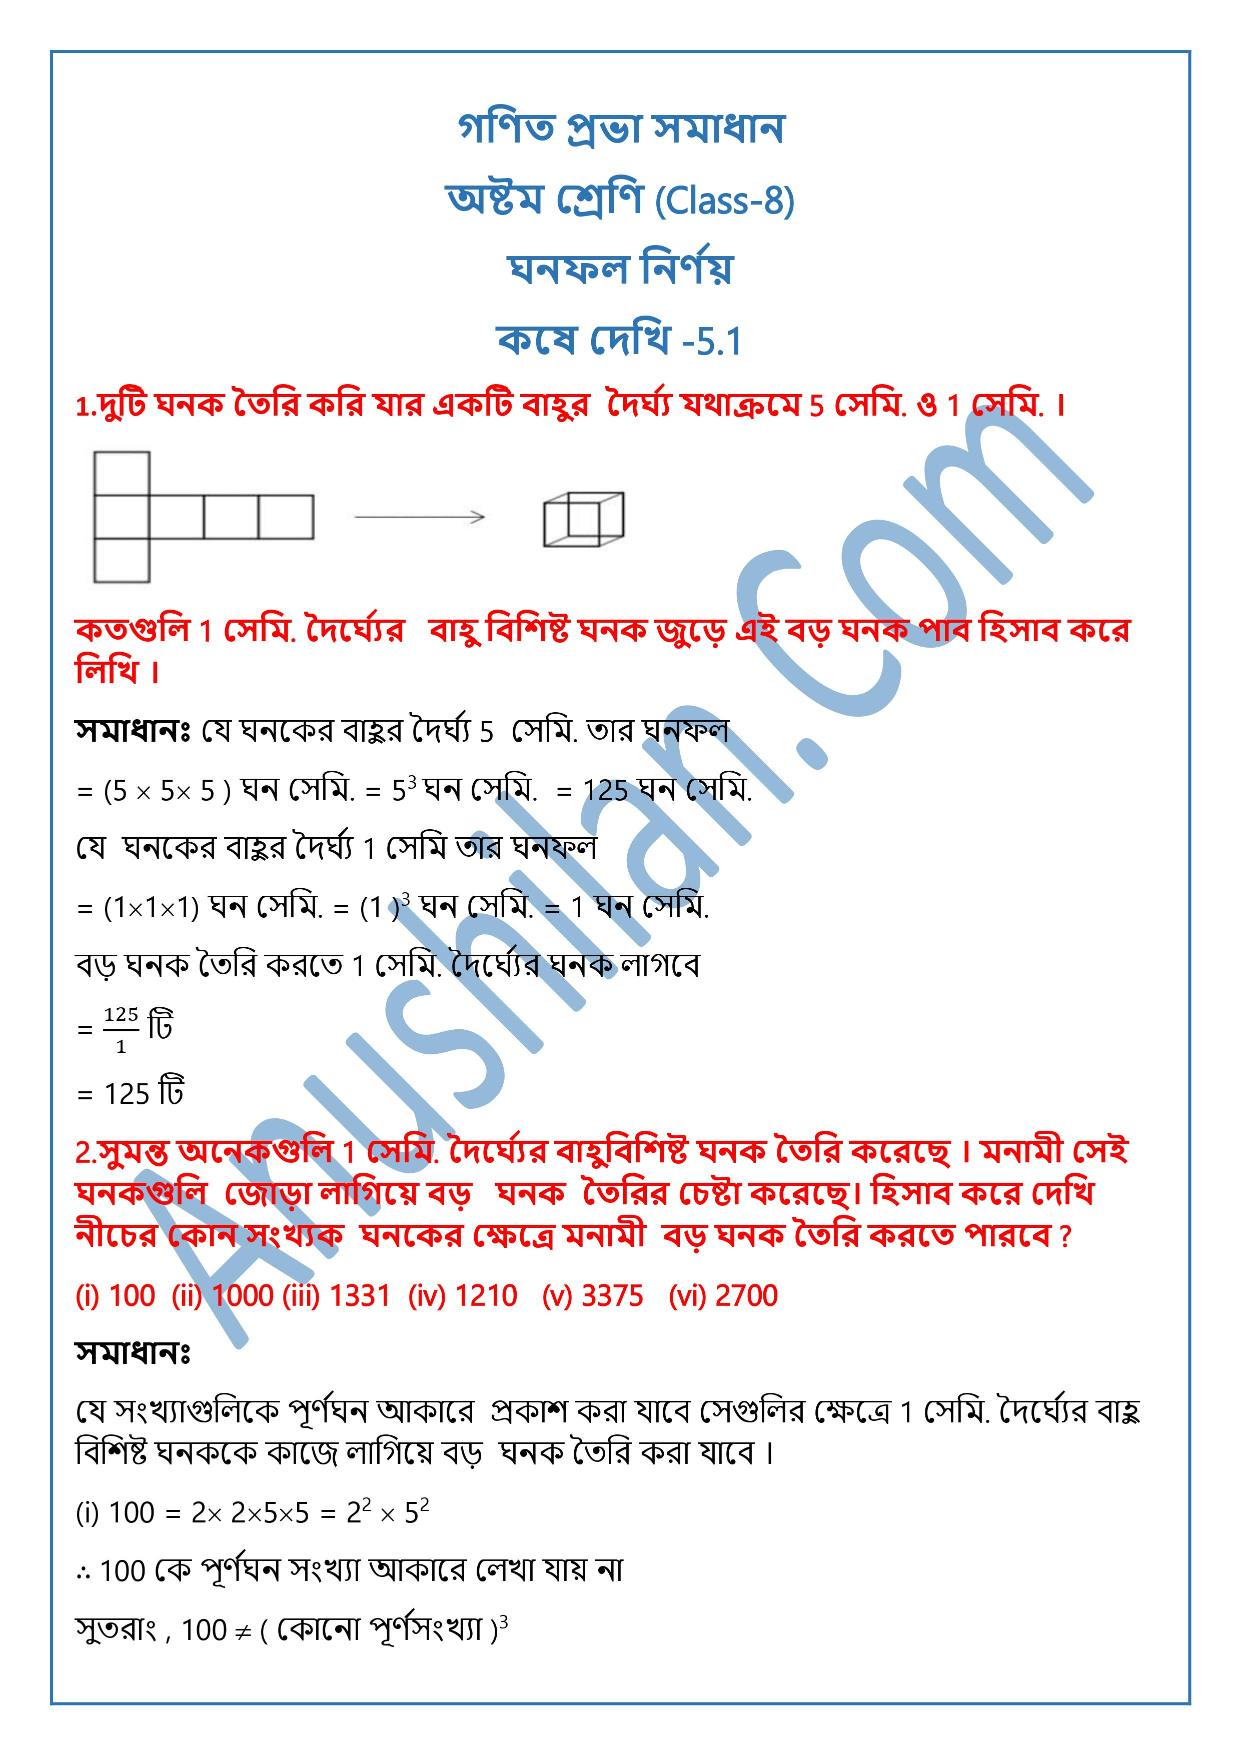 Ganit Prabha Class 8 Koshe Dekhi 5.1 Solution|ঘনফল নির্ণয় কষে দেখি ৫.১|গণিত প্রভা অষ্টম শ্রেণি কষে দেখি ৫.১ সমাধান|গণিত প্রভা ক্লাস ৮ কষে দেখি ৫.১ সমাধান|WBBSE Class 8 Math Book Solution Of Chapter 5 In Bengali|West Bengal Board Class 8 Math Book Solution In Bengali